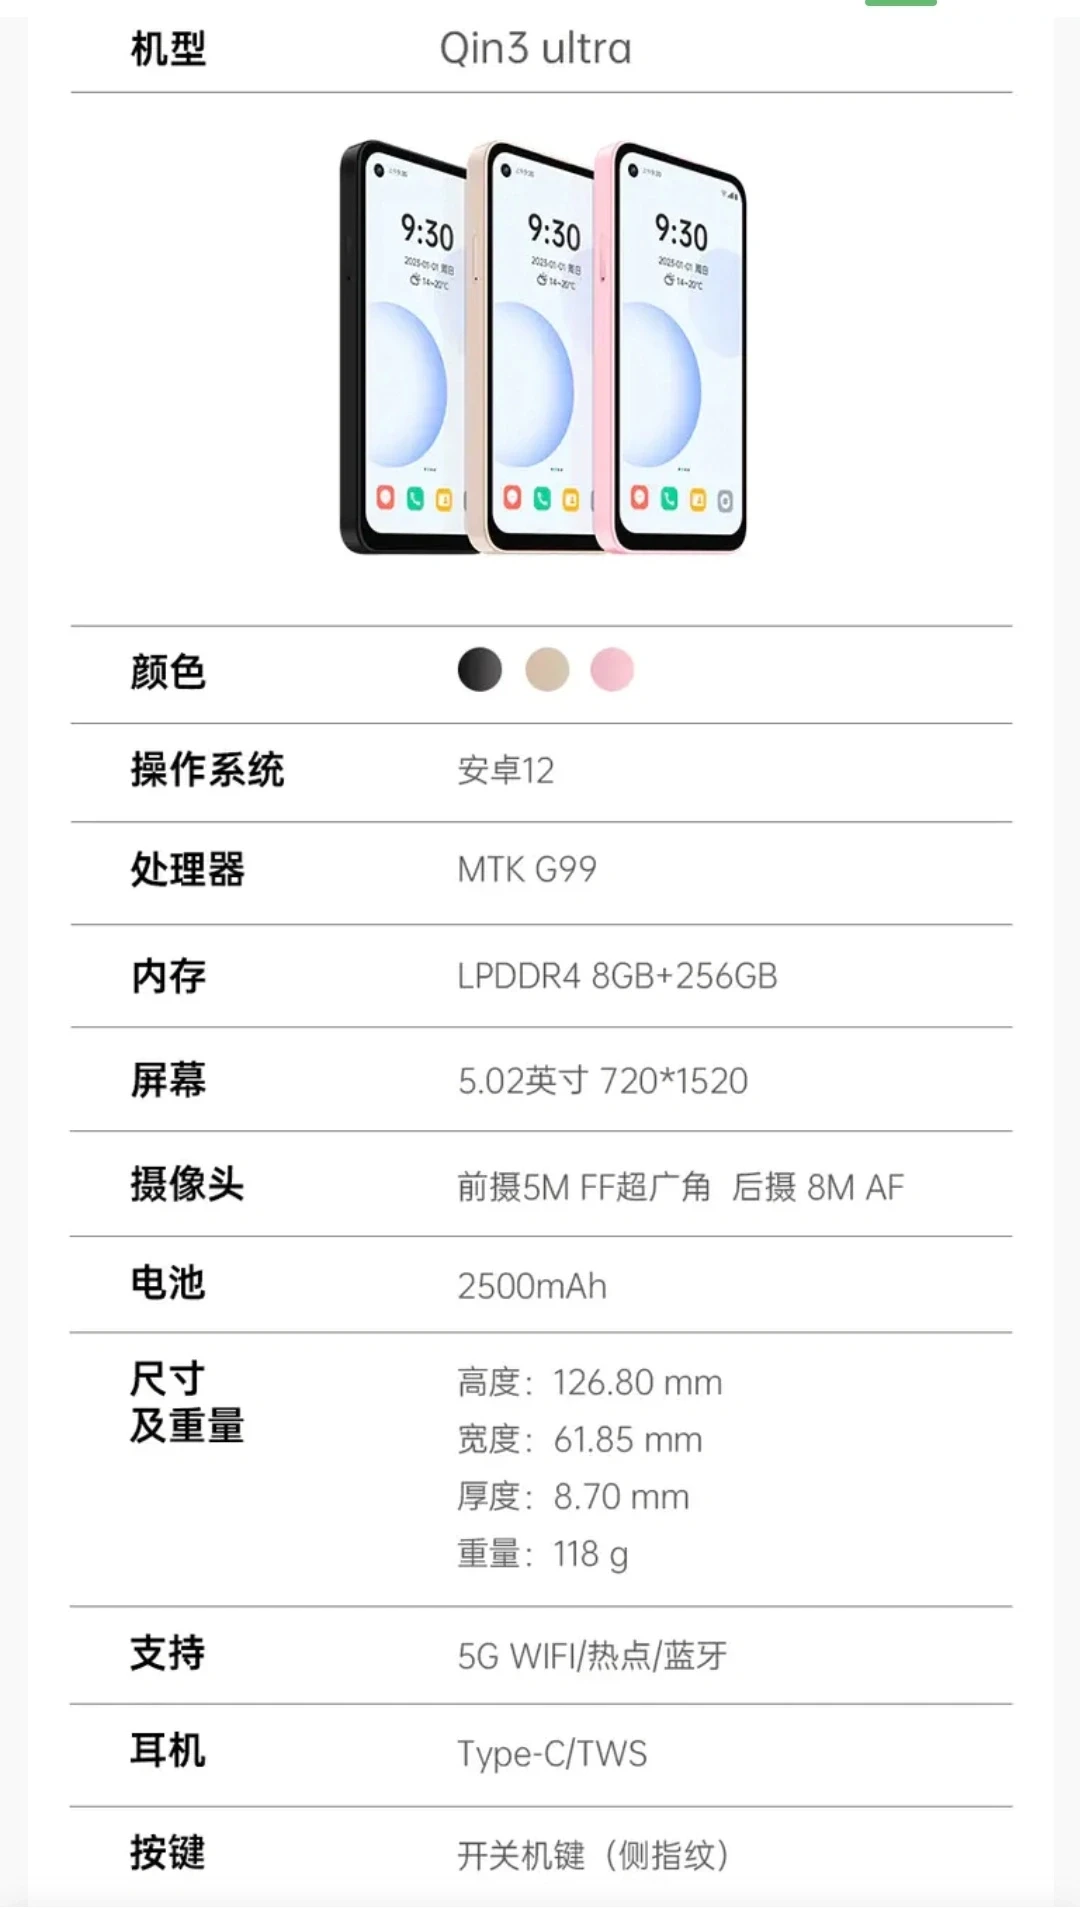 В продажу поступил смартфон с экраном 5,02 дюйма Duoqin Qin3 Ultra ()